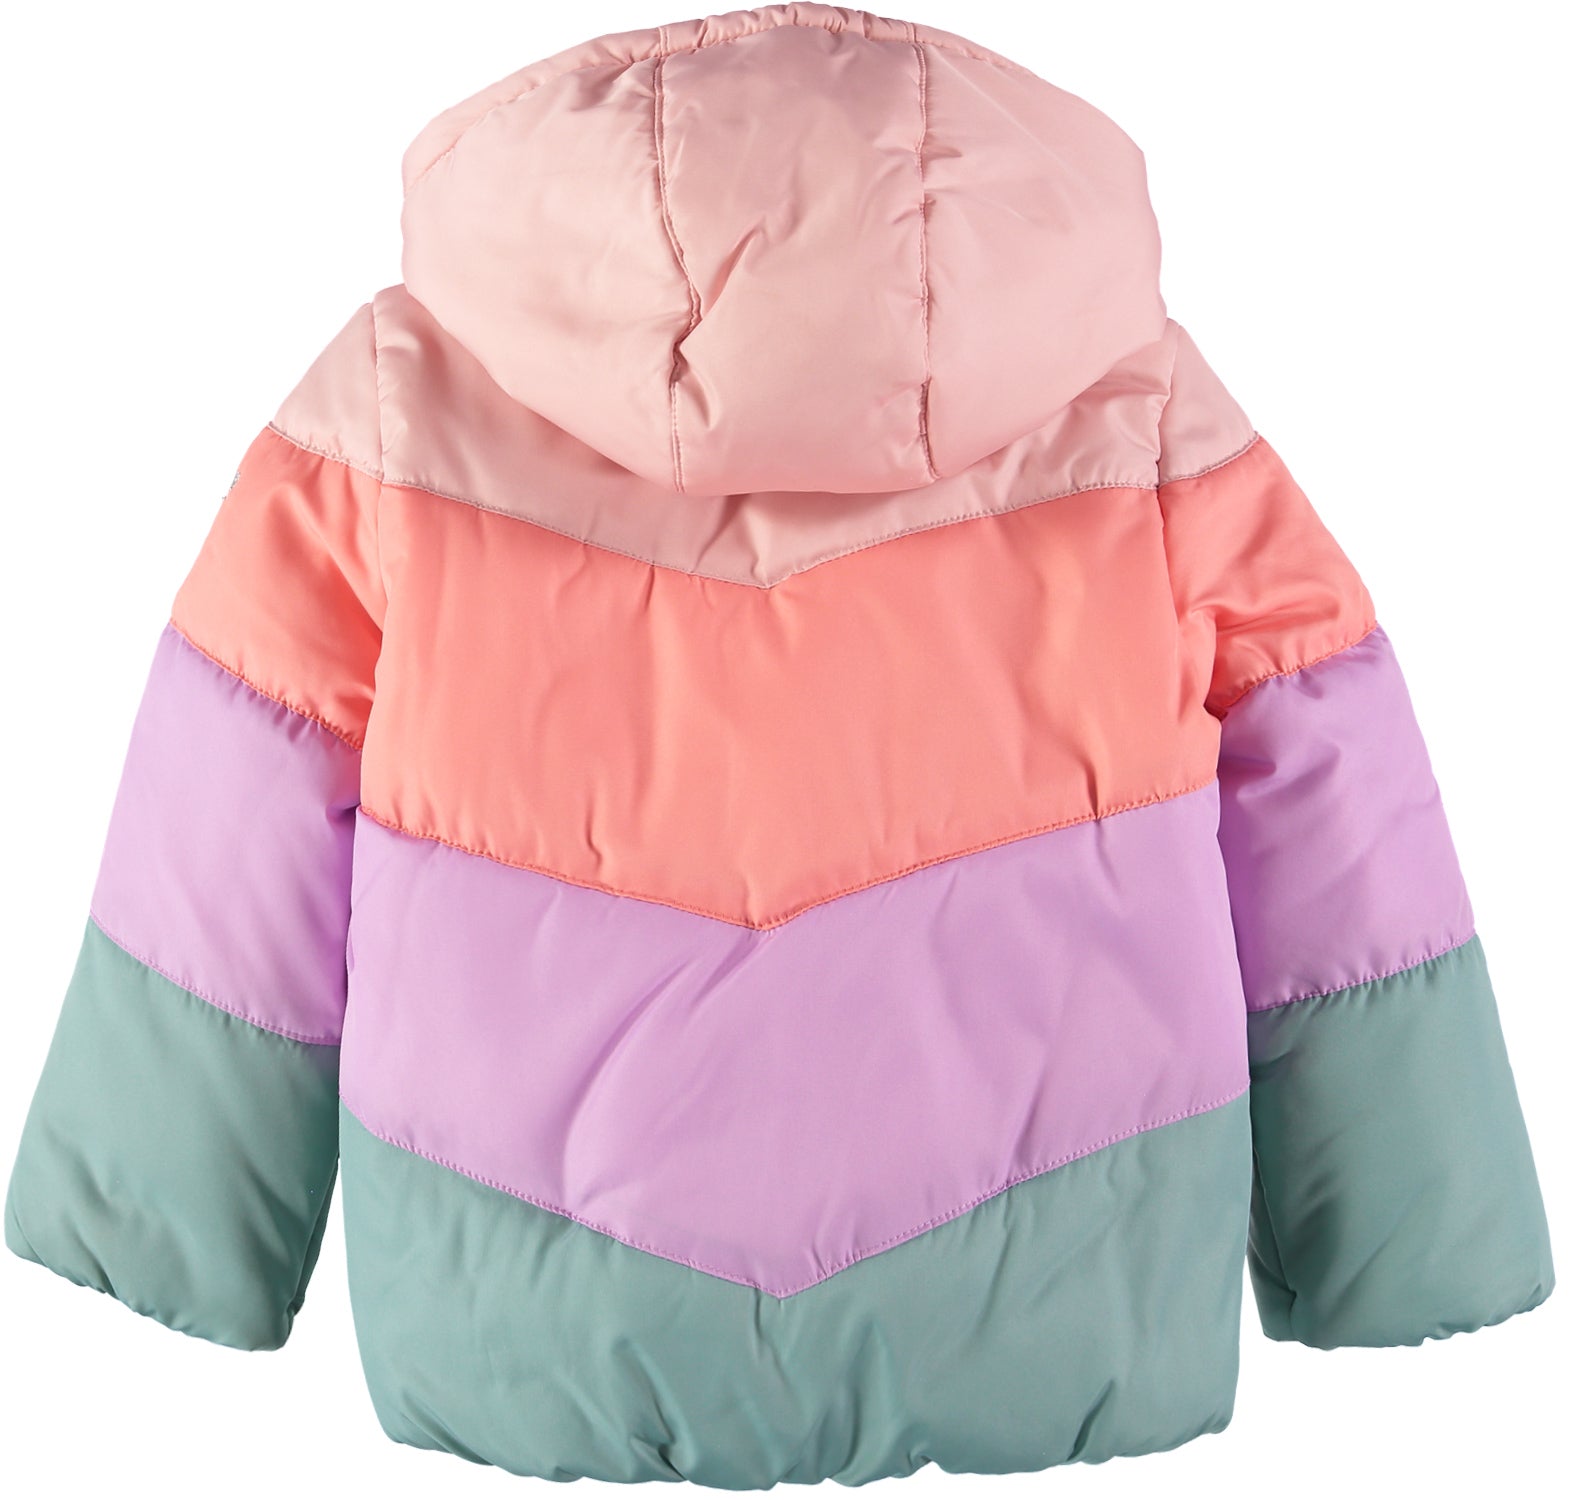 Osh Kosh Girls 2T-4T Colorblocked Chevron Puffer Jacket